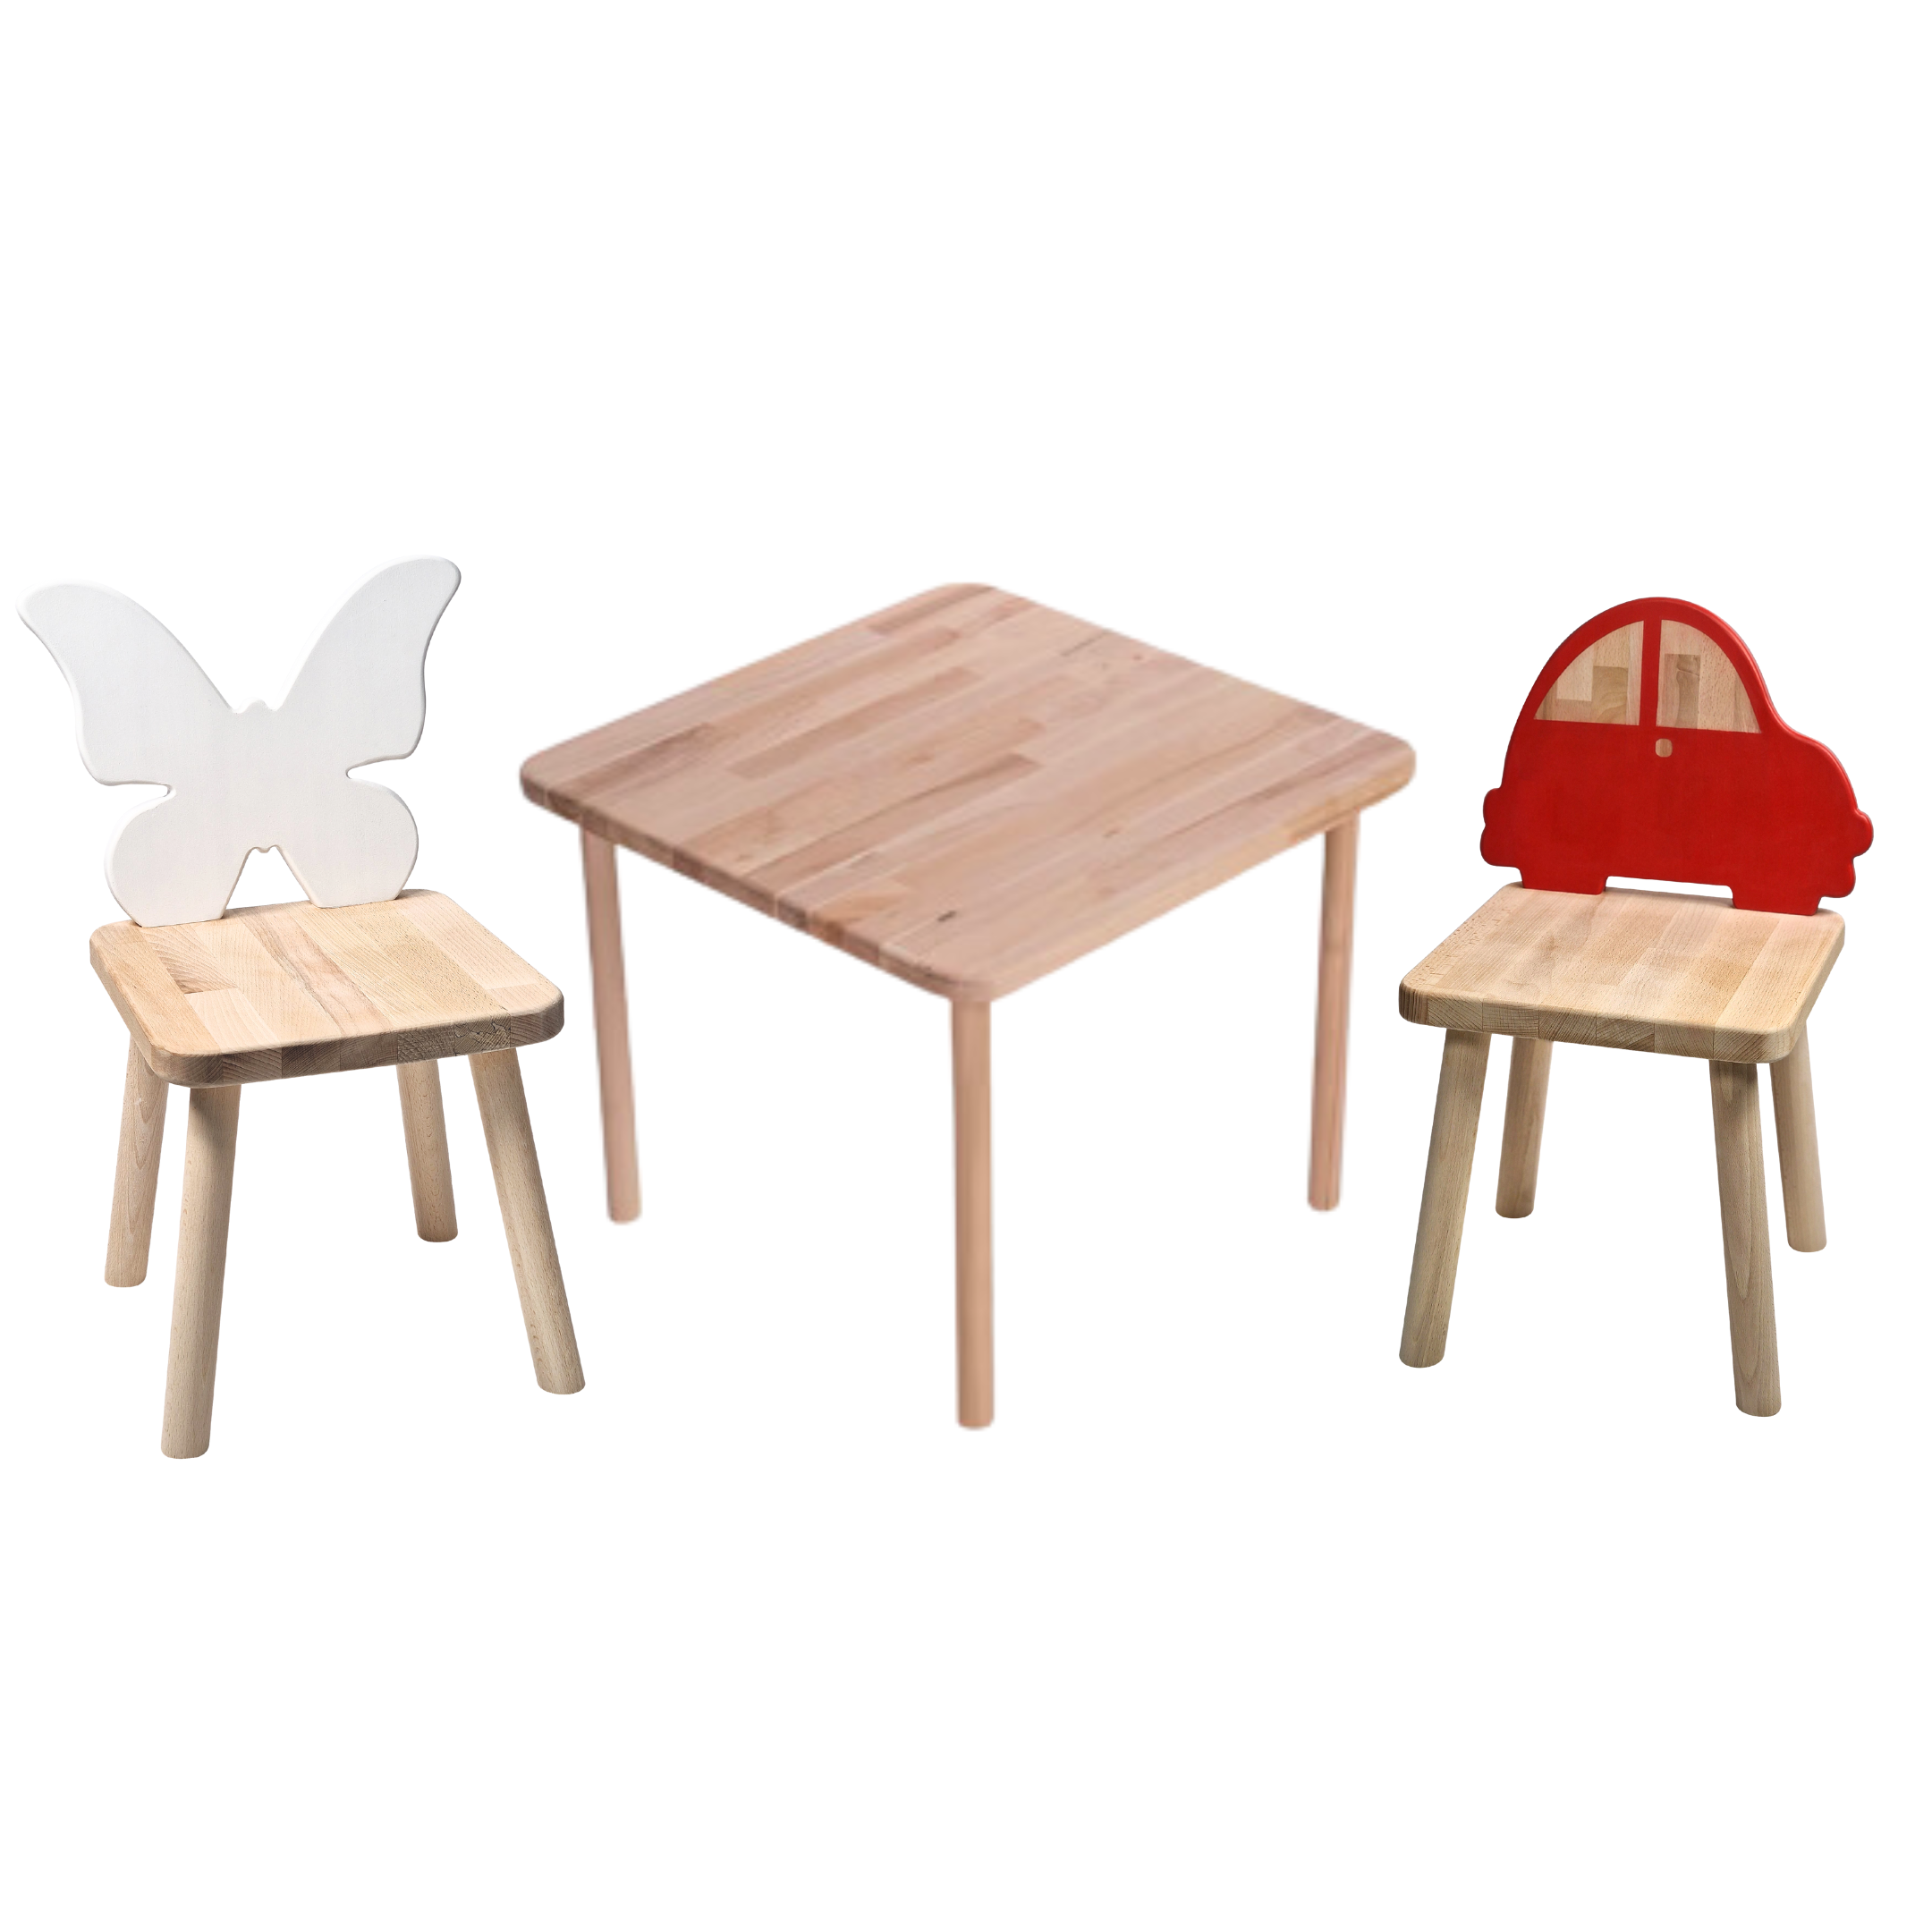 Set sedia e tavolo per bambini - AVWoodSy AG